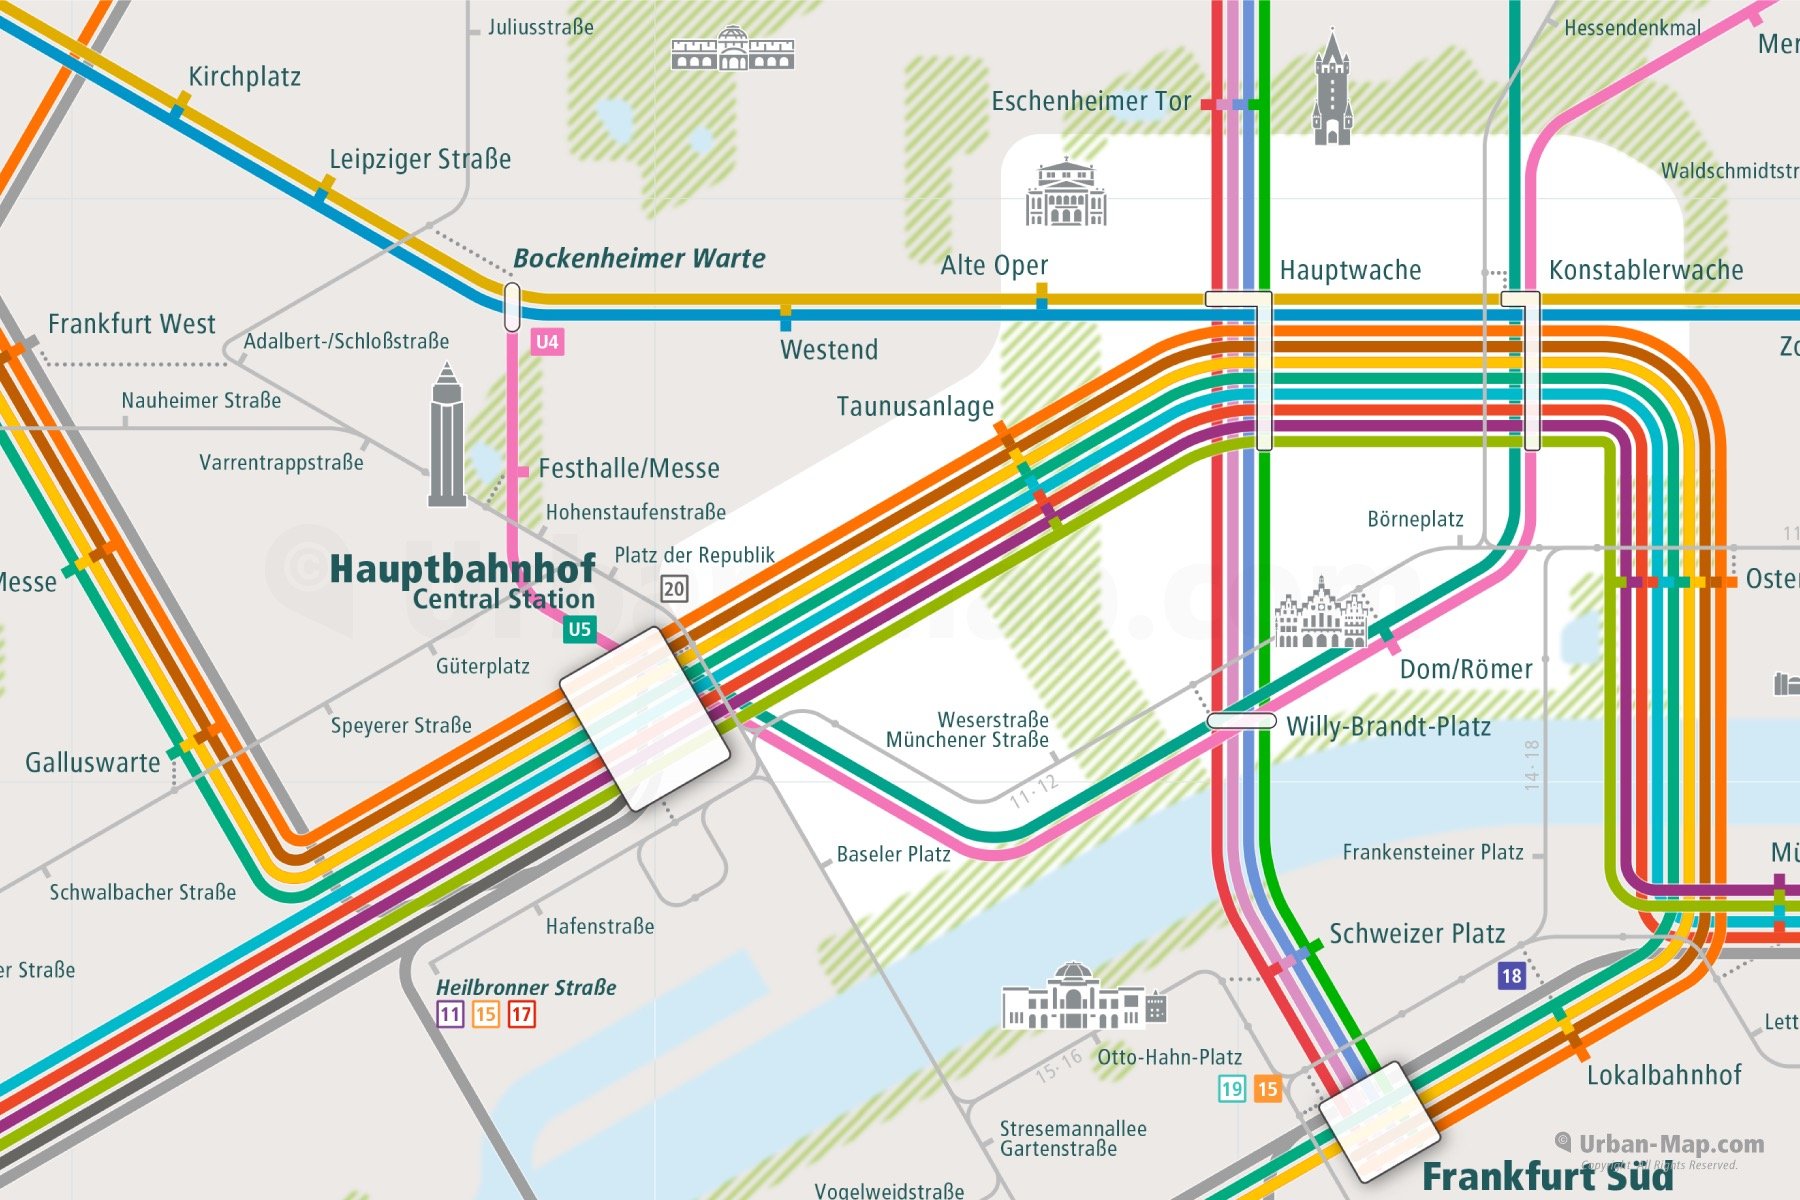 Frankfurt City Rail Map shows the train and public transportation routes of U-Bahn, S-Bahn, Tram, Strassenbahn - Close-Up